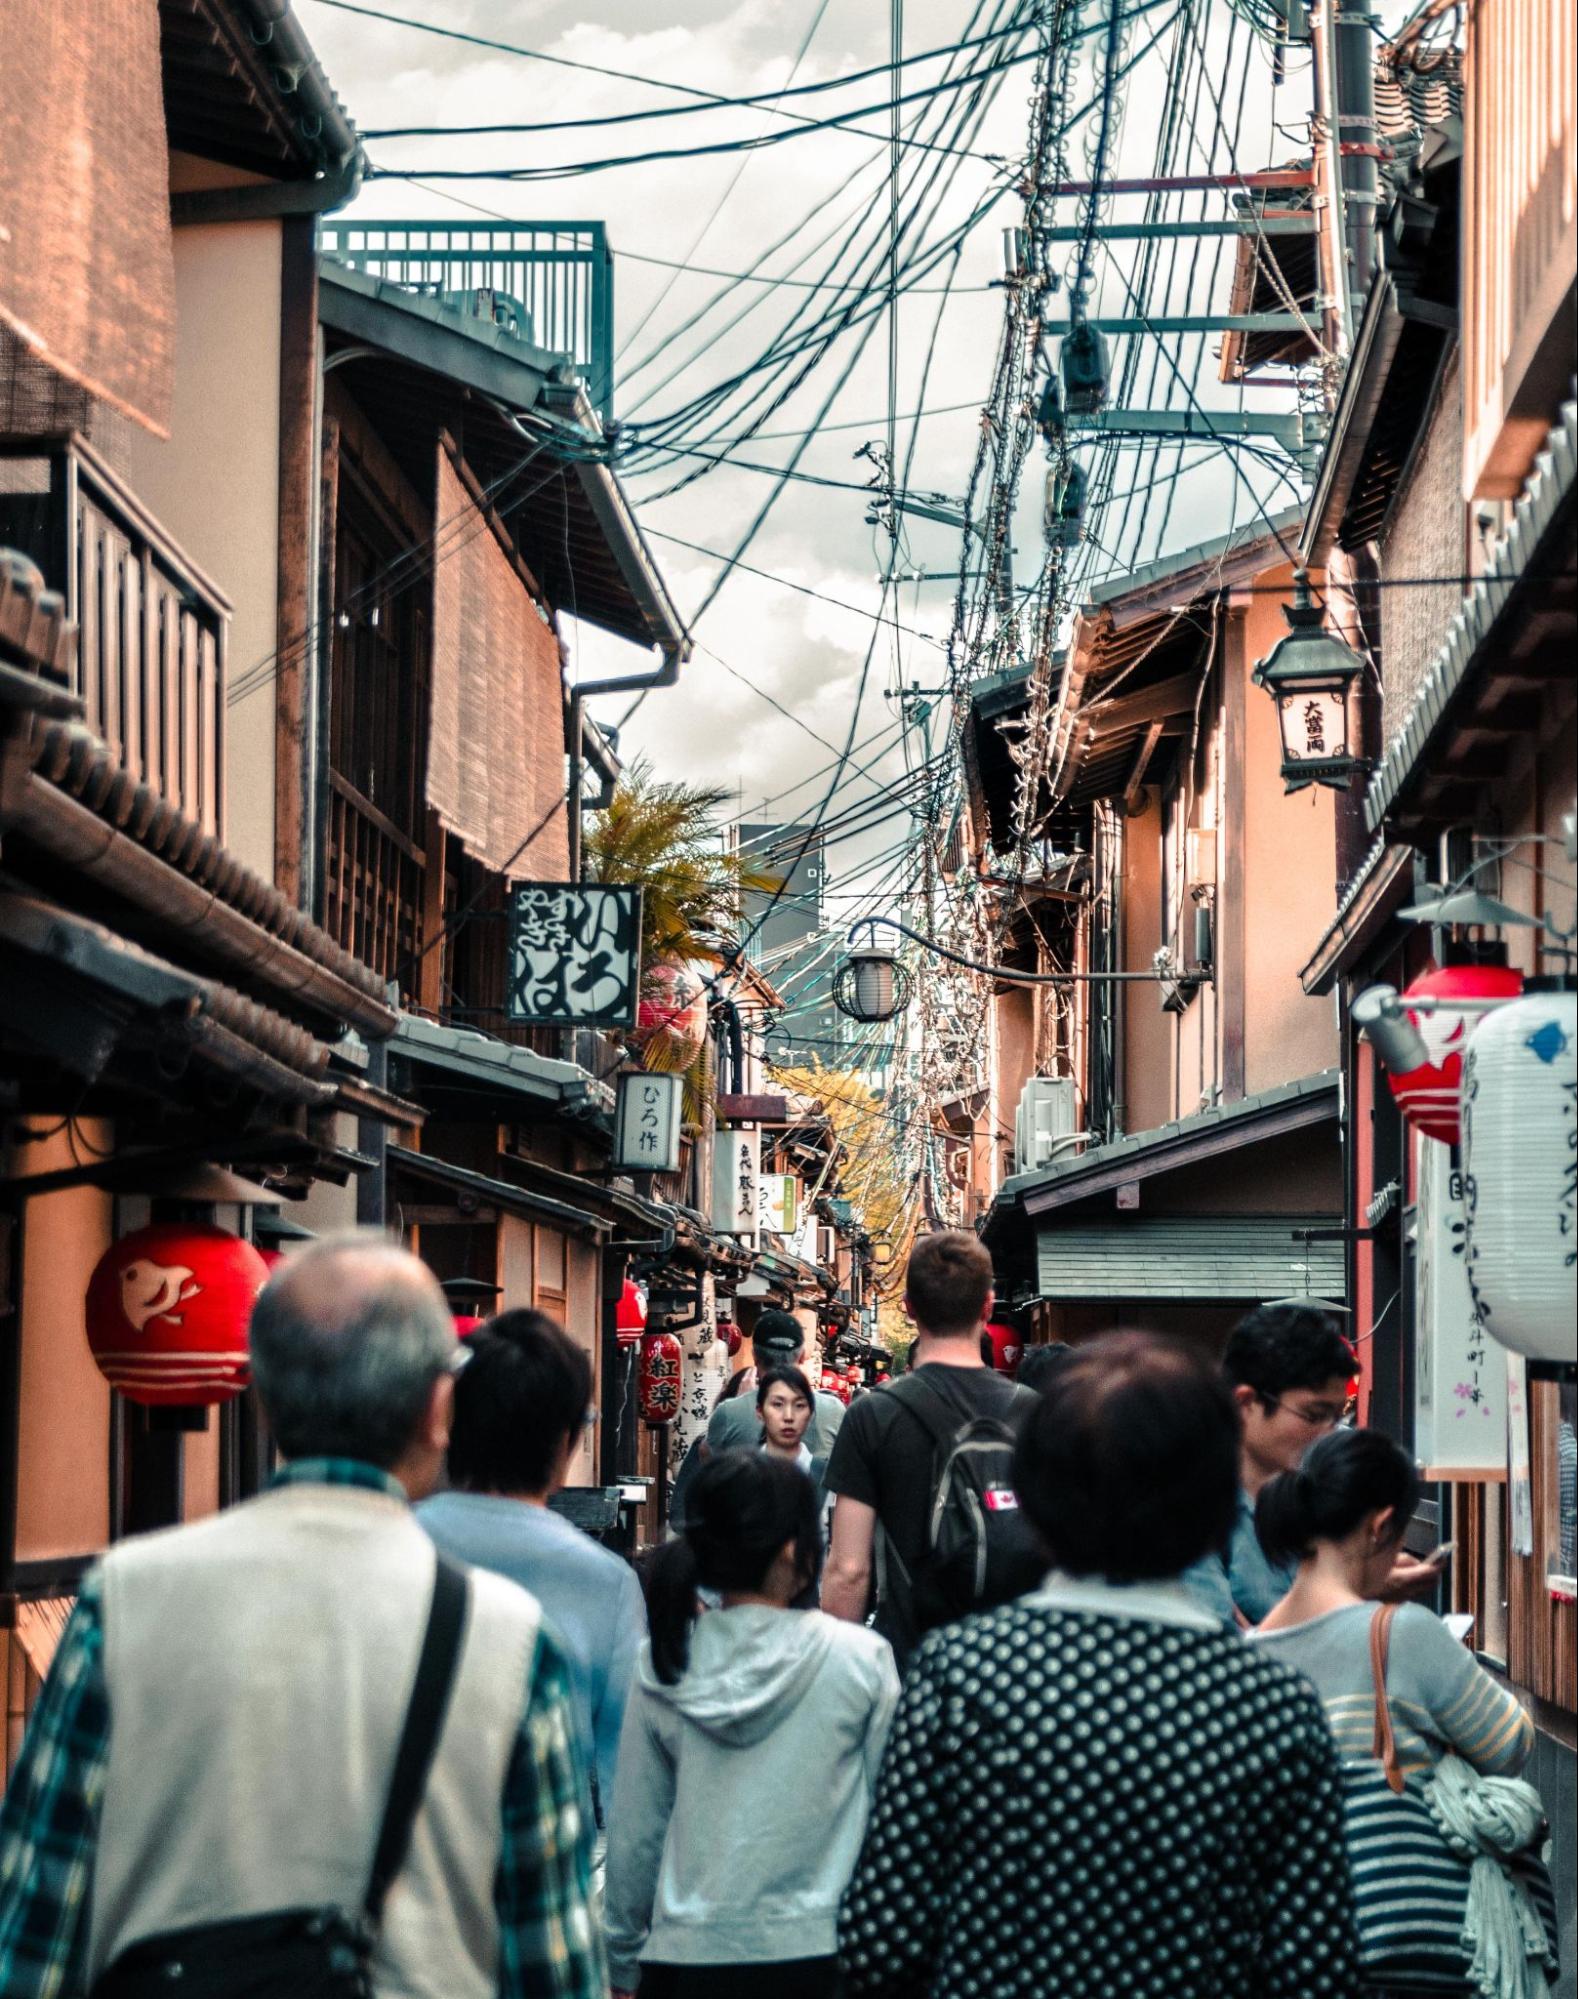 People walking down a crowded street in Tokyo, Japan.